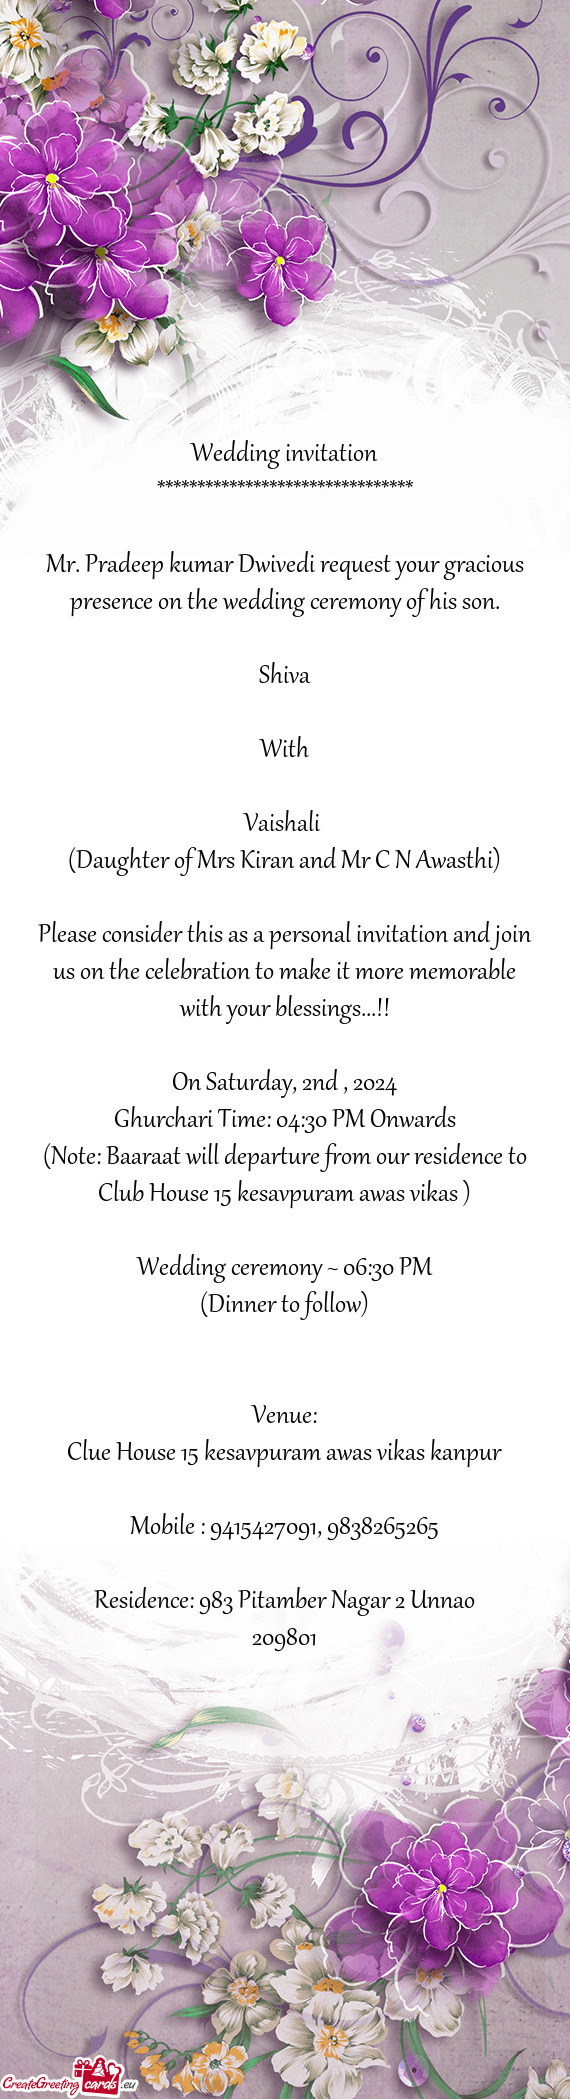 Mr. Pradeep kumar Dwivedi request your gracious presence on the wedding ceremony of his son